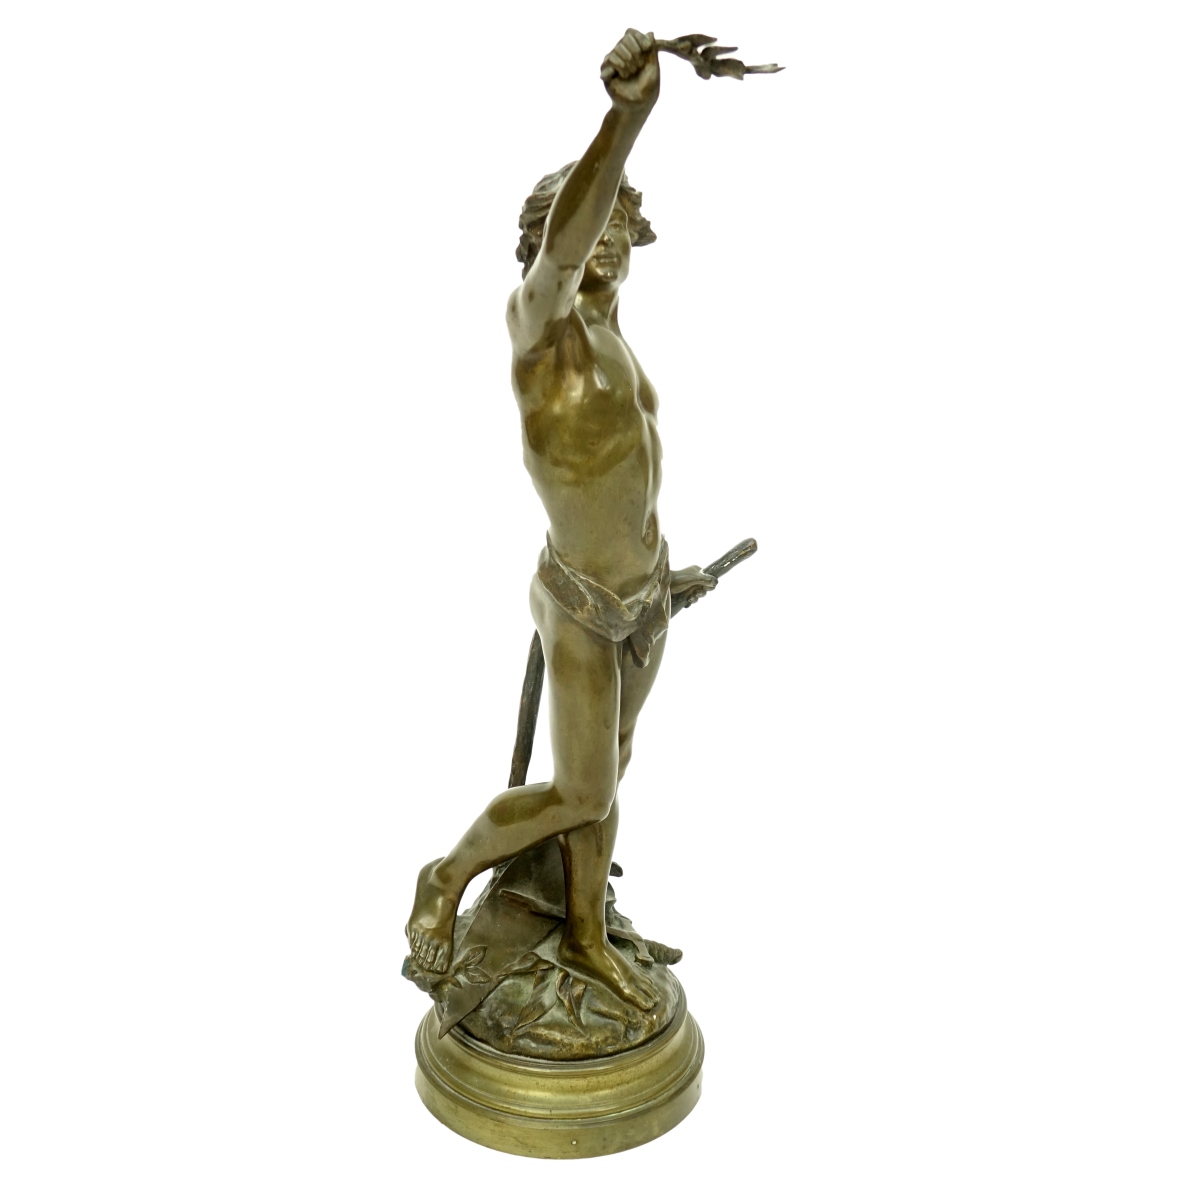 Edouard Drouot, French (1859 - 1945) Bronze